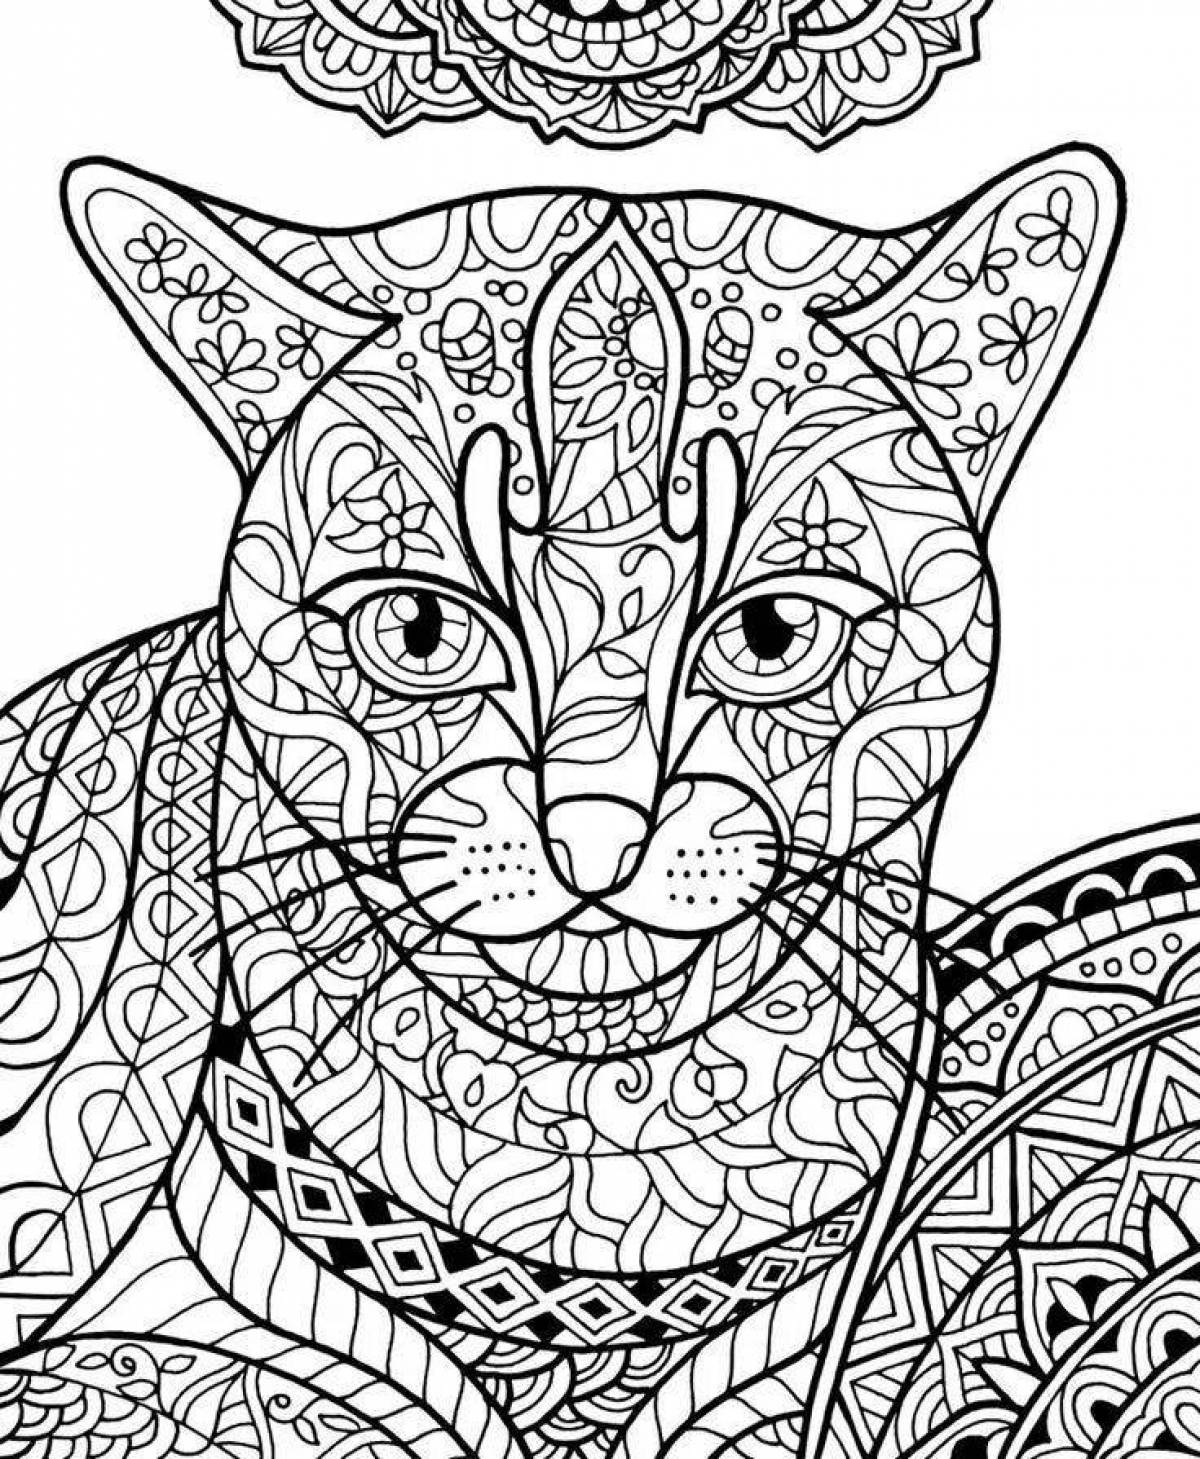 Serene coloring page сложный кот